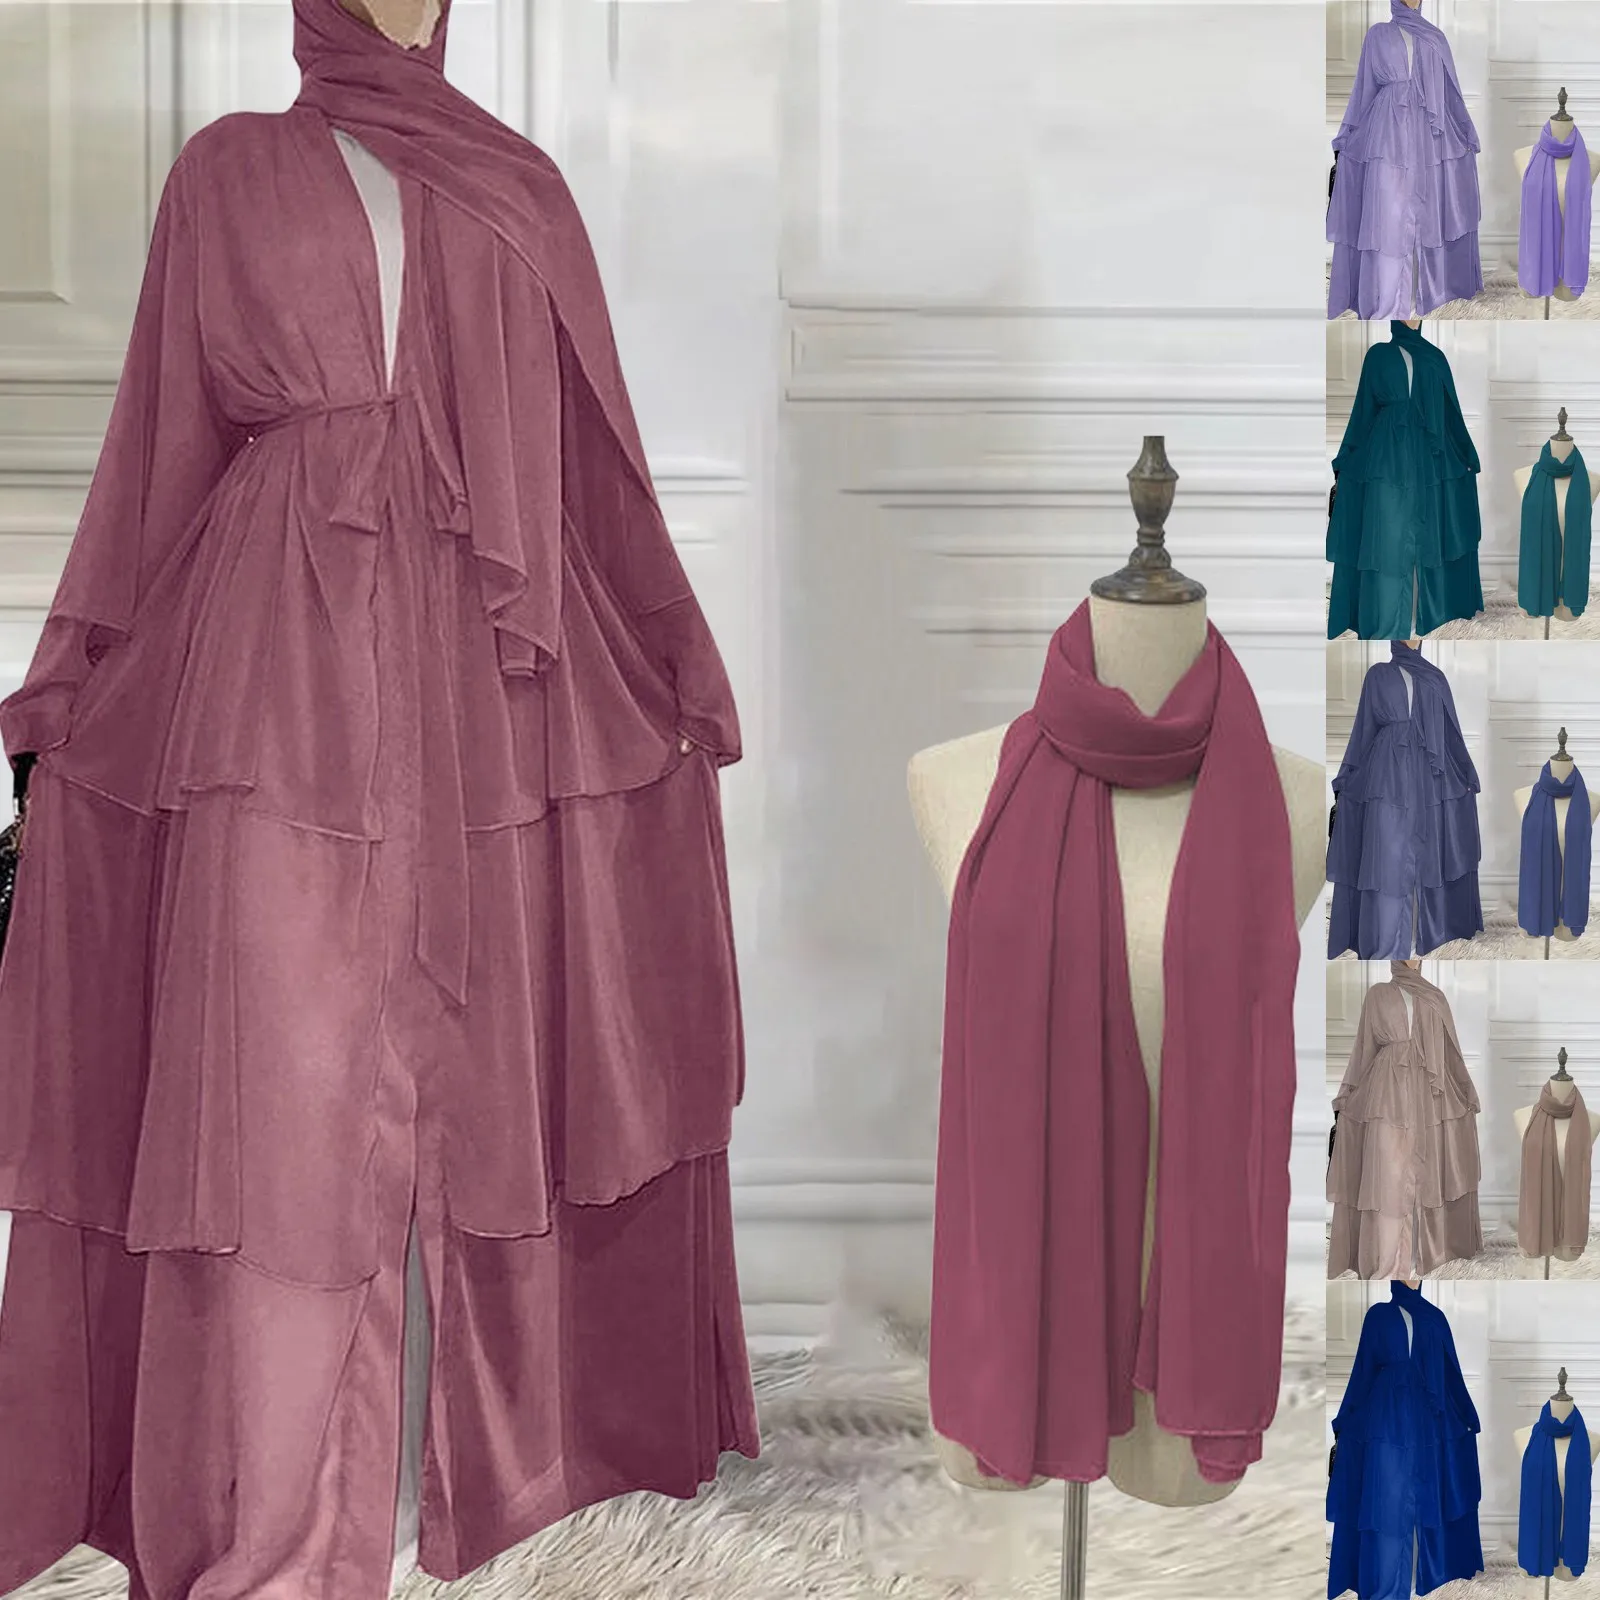 

Cardigan Set For Women Party Dress Kpytomoa Plus Size Women Clothing Outer Banks Caftan Marocain Muslim Turkey Pakistani Abayas